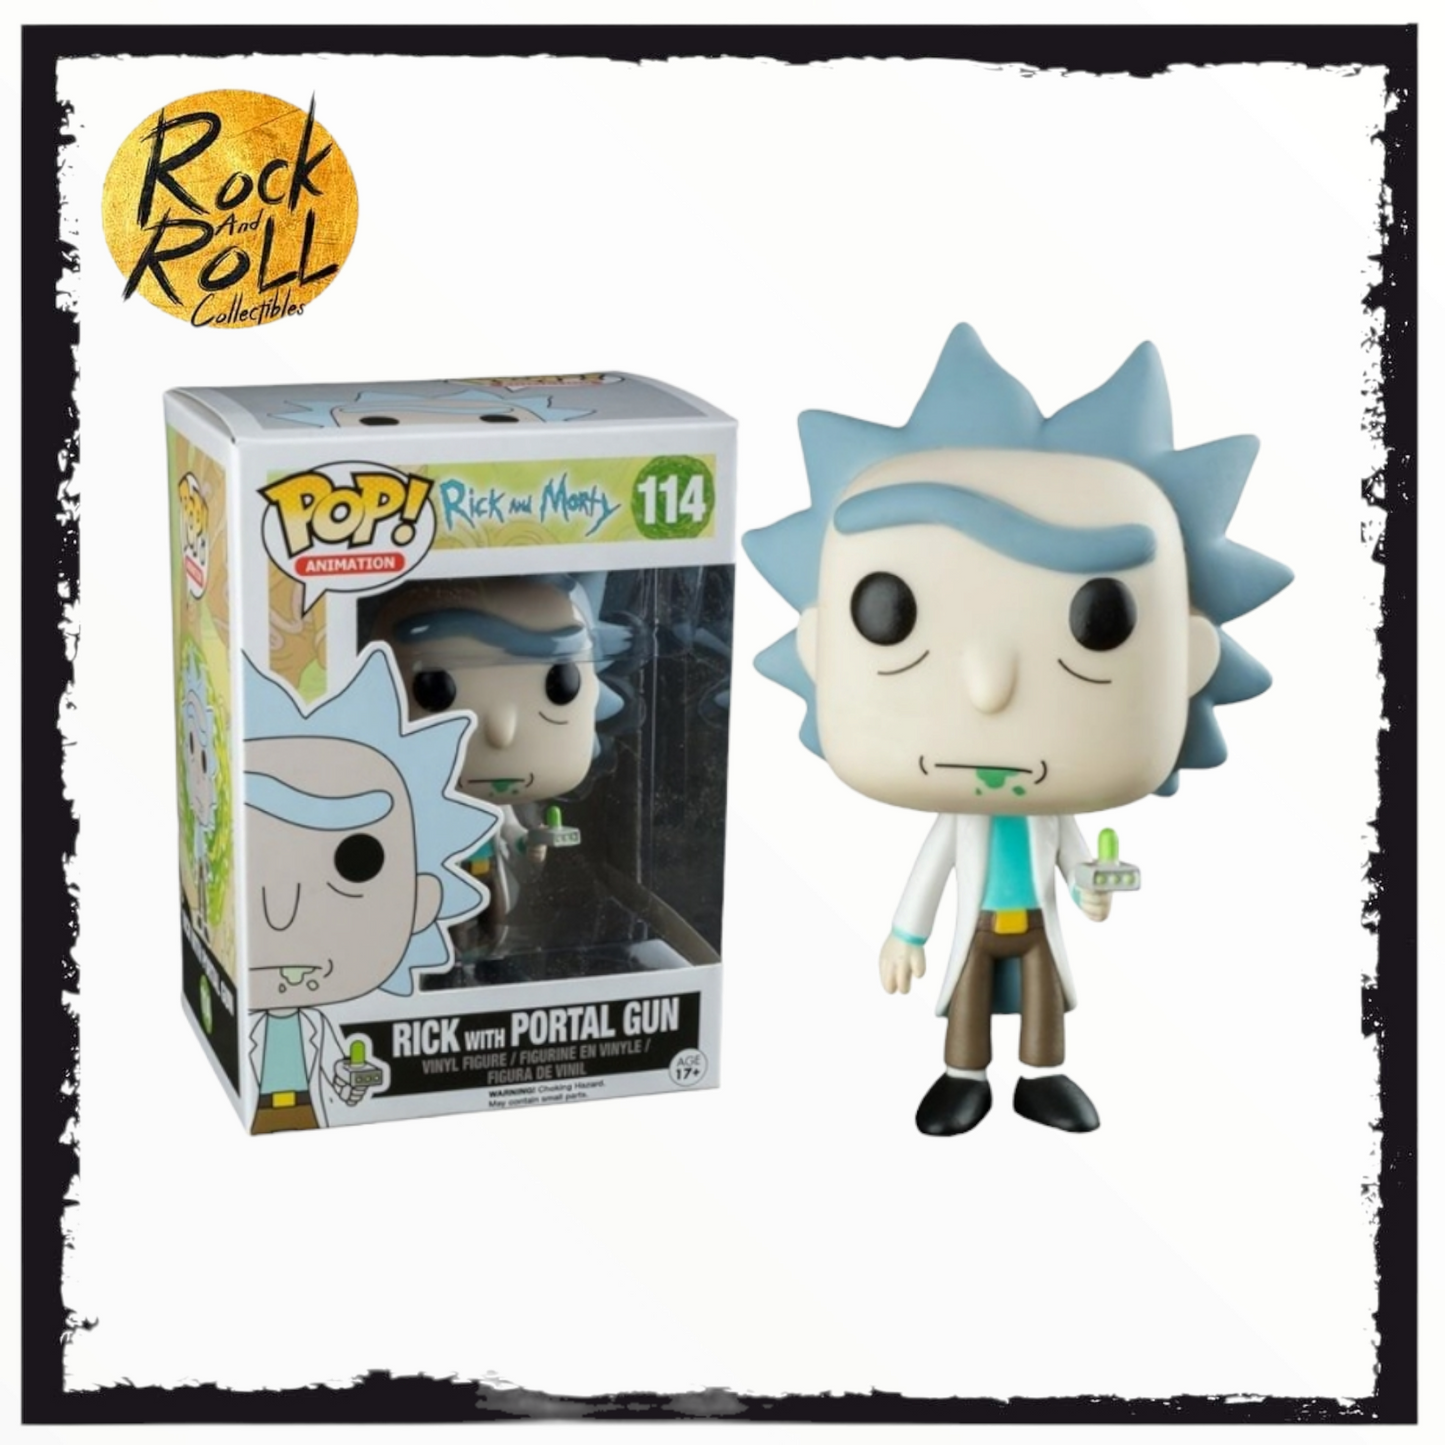 Rick and Morty - Rick with Portal Gun Funko Pop! #114